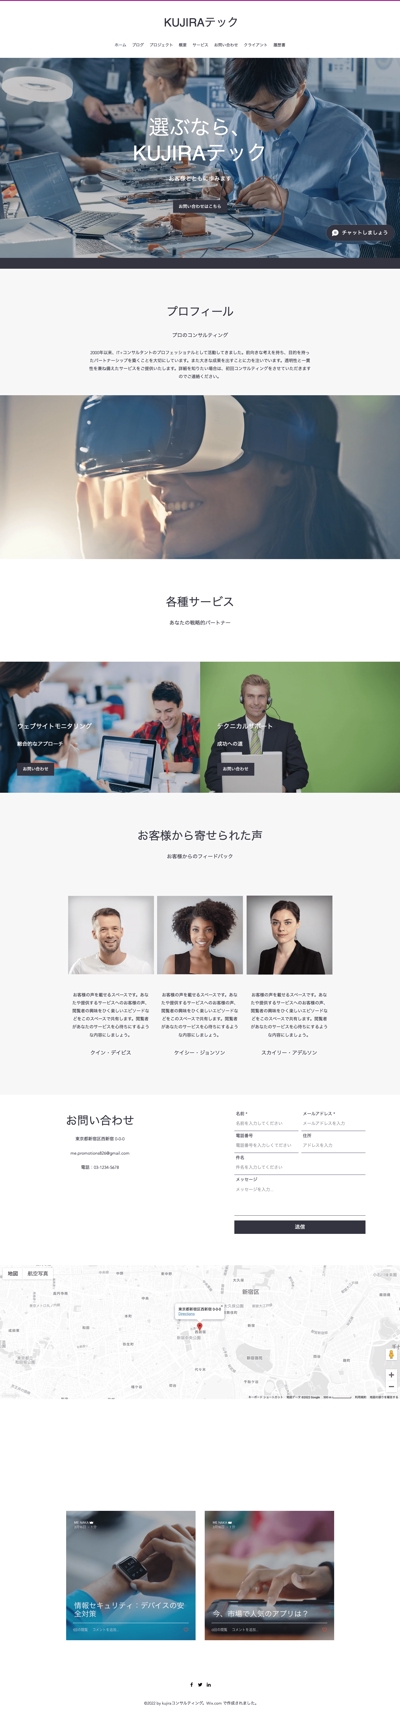 ITツールや技術を駆使したサービスが売りのkujiraテックのホームページ